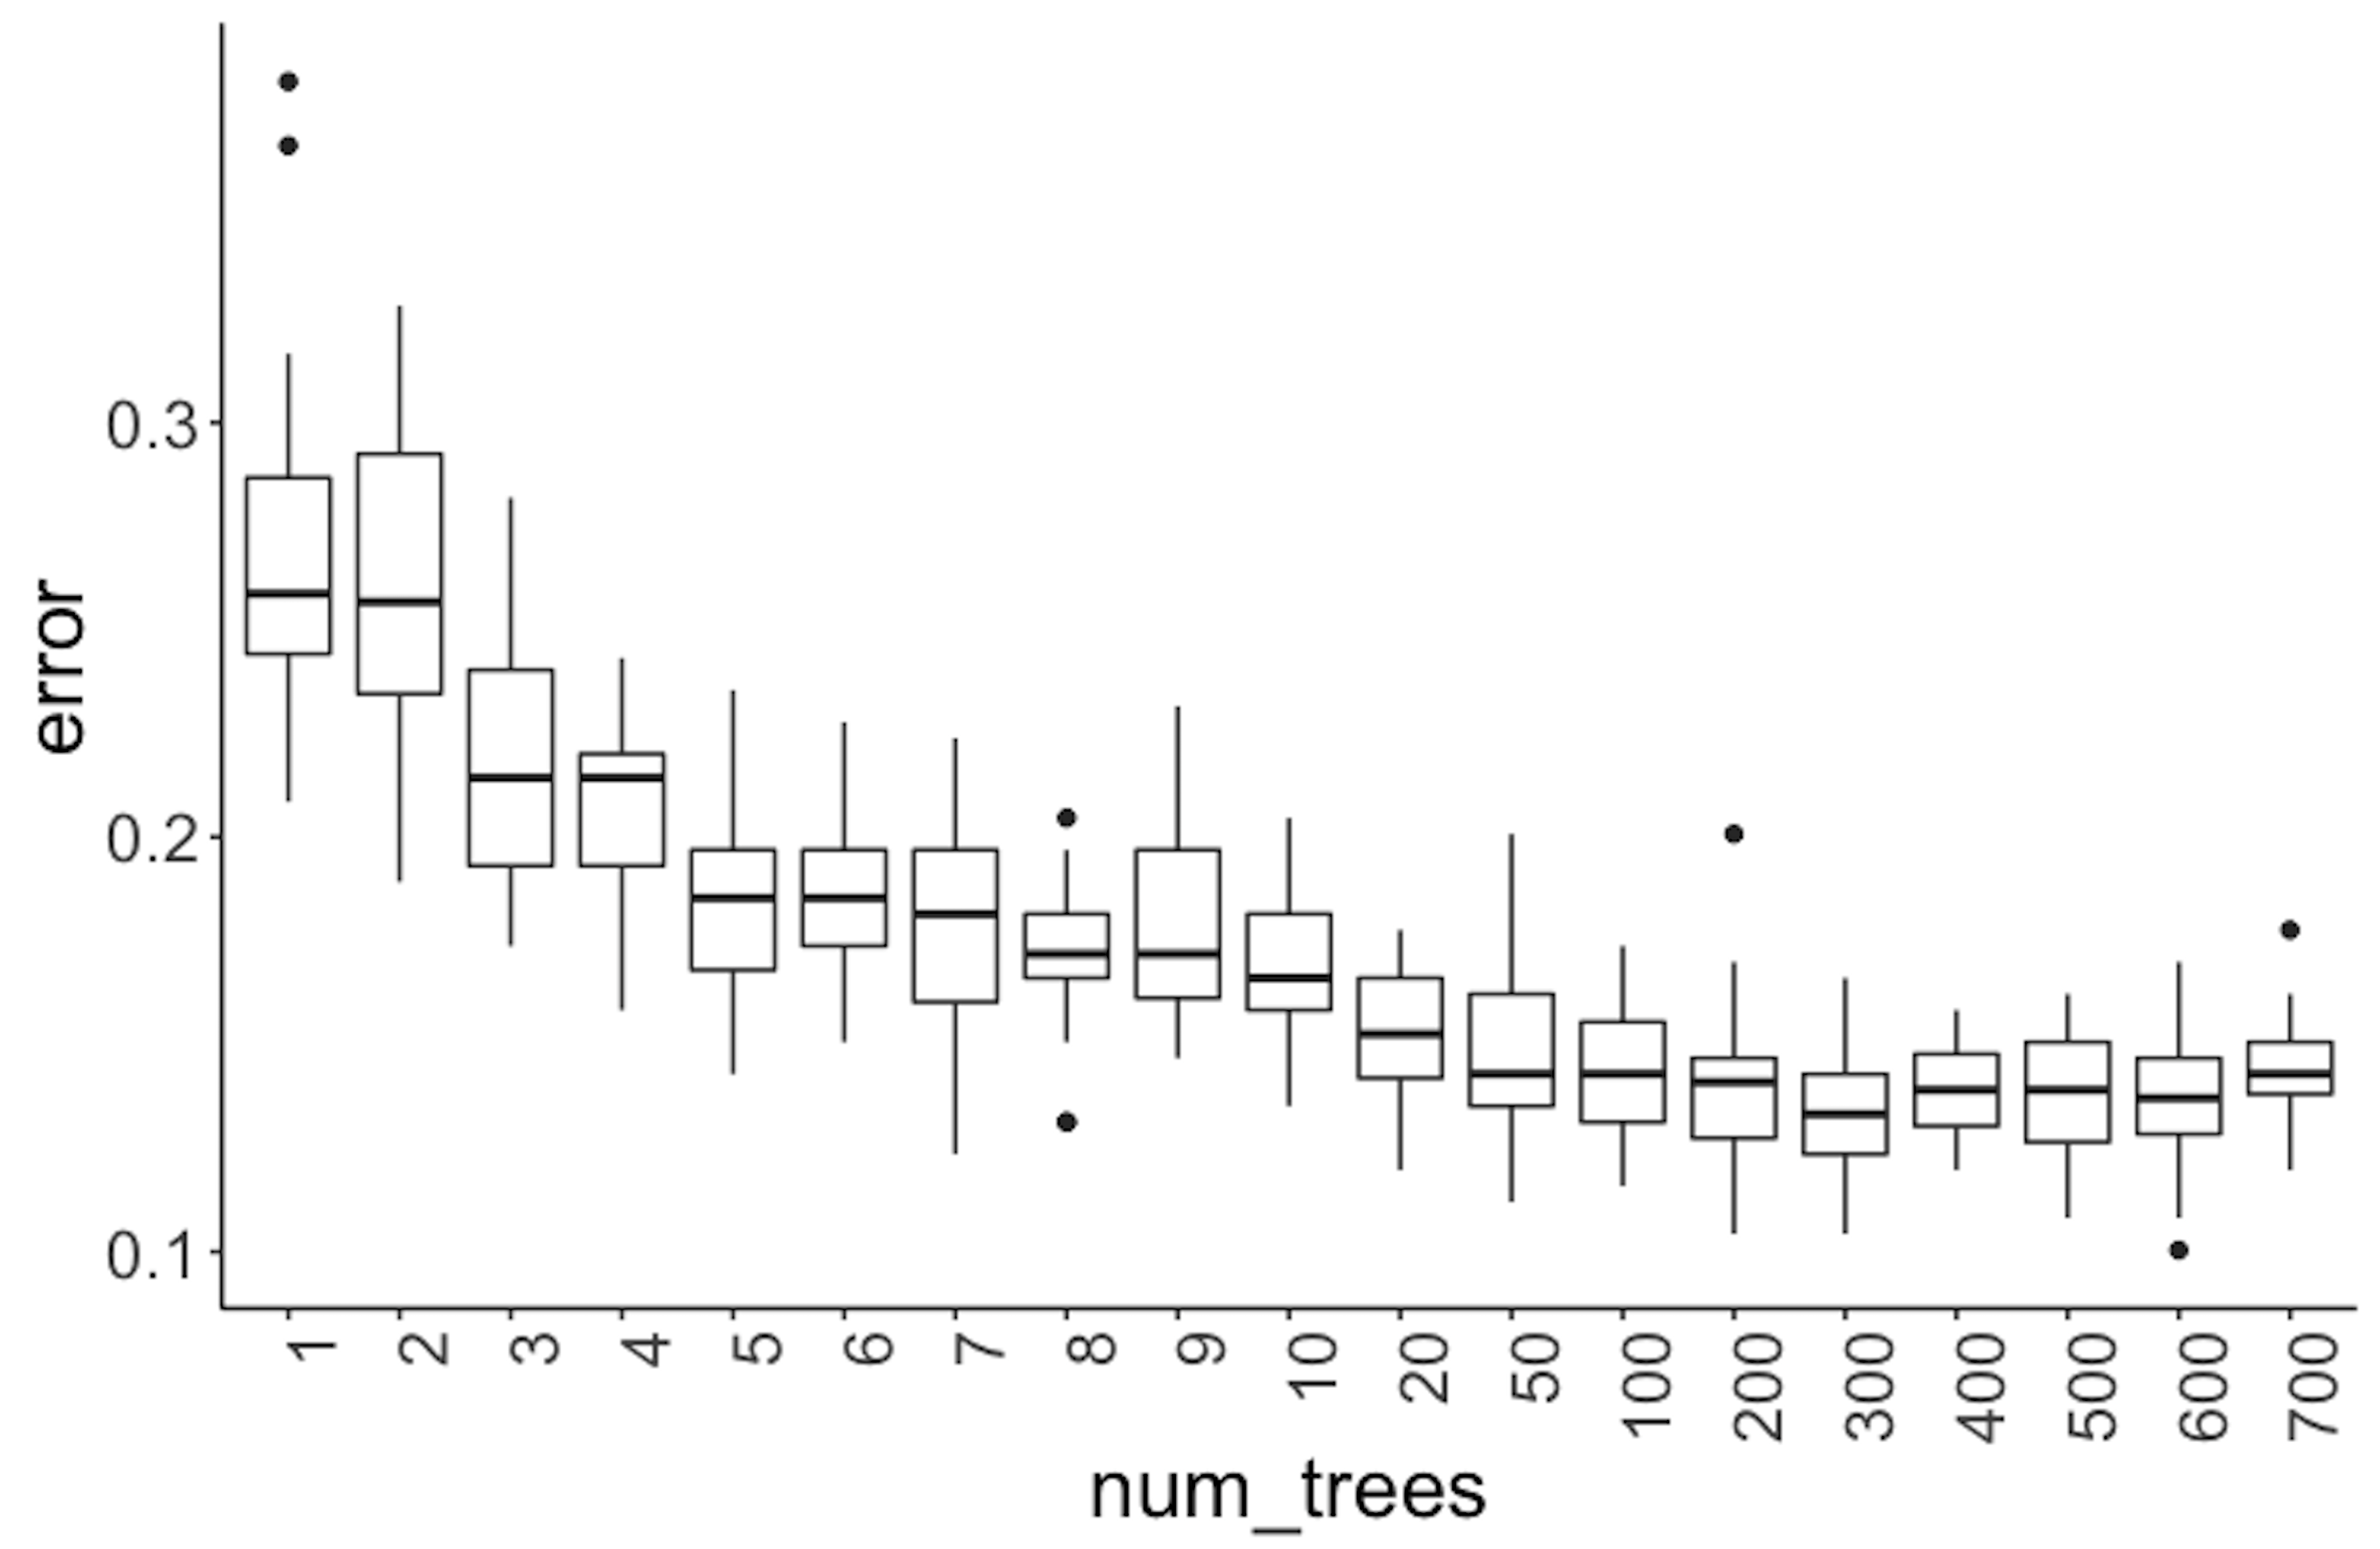 Error v.s. number of trees in a random forest model